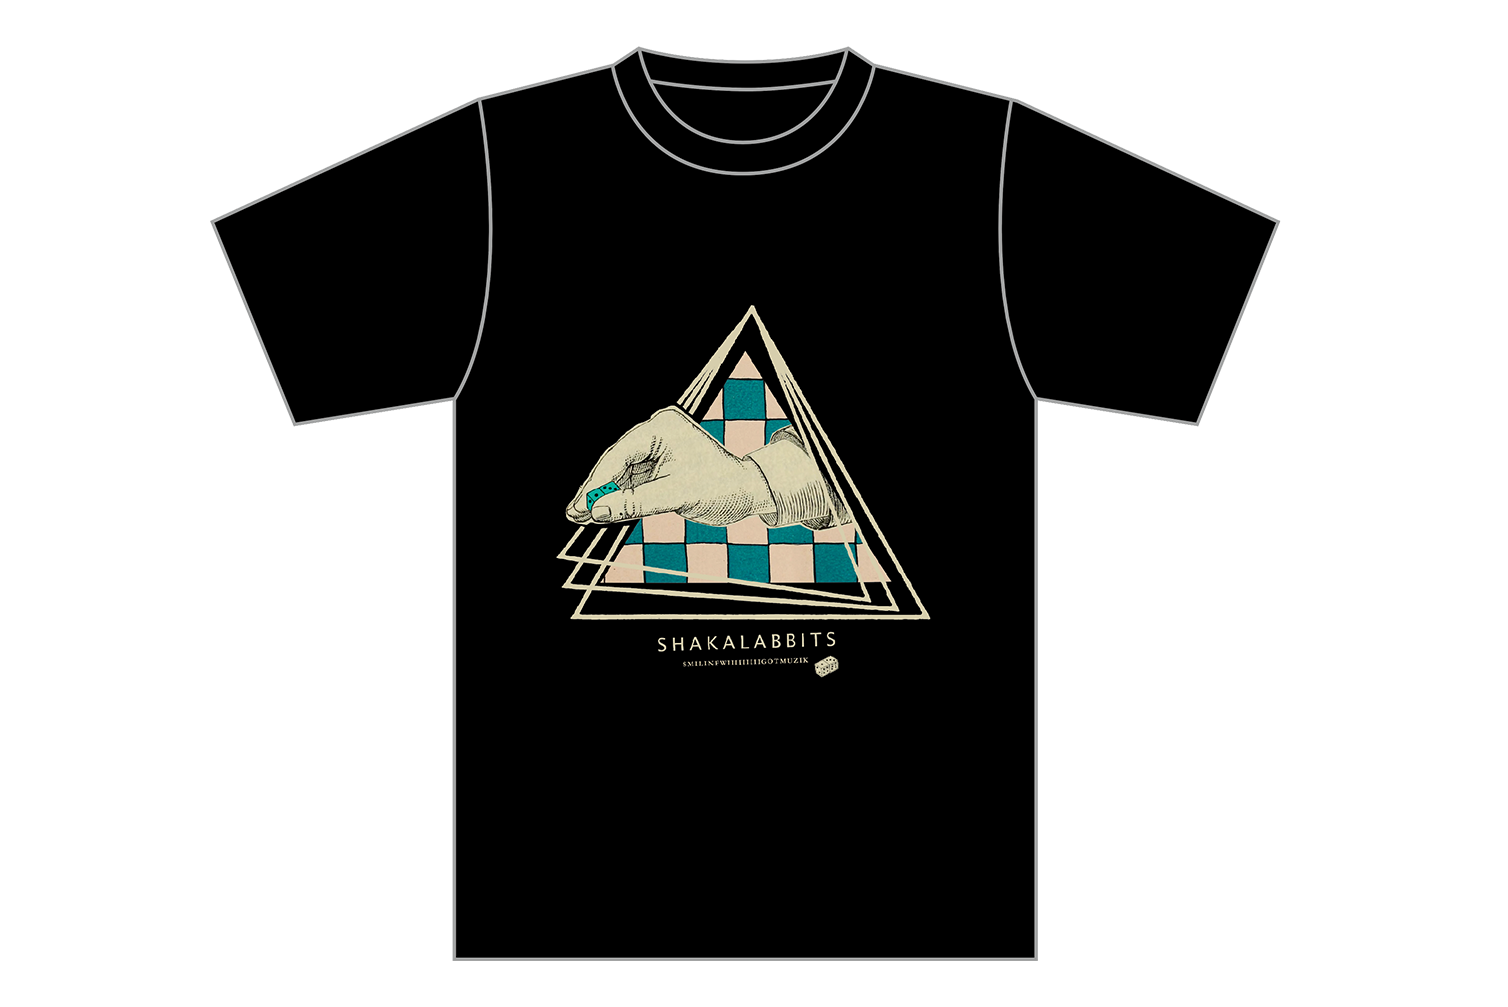 Shakalabbits Tシャツ 株式会社sabeevo アイデアを具現化するデザイン制作会社